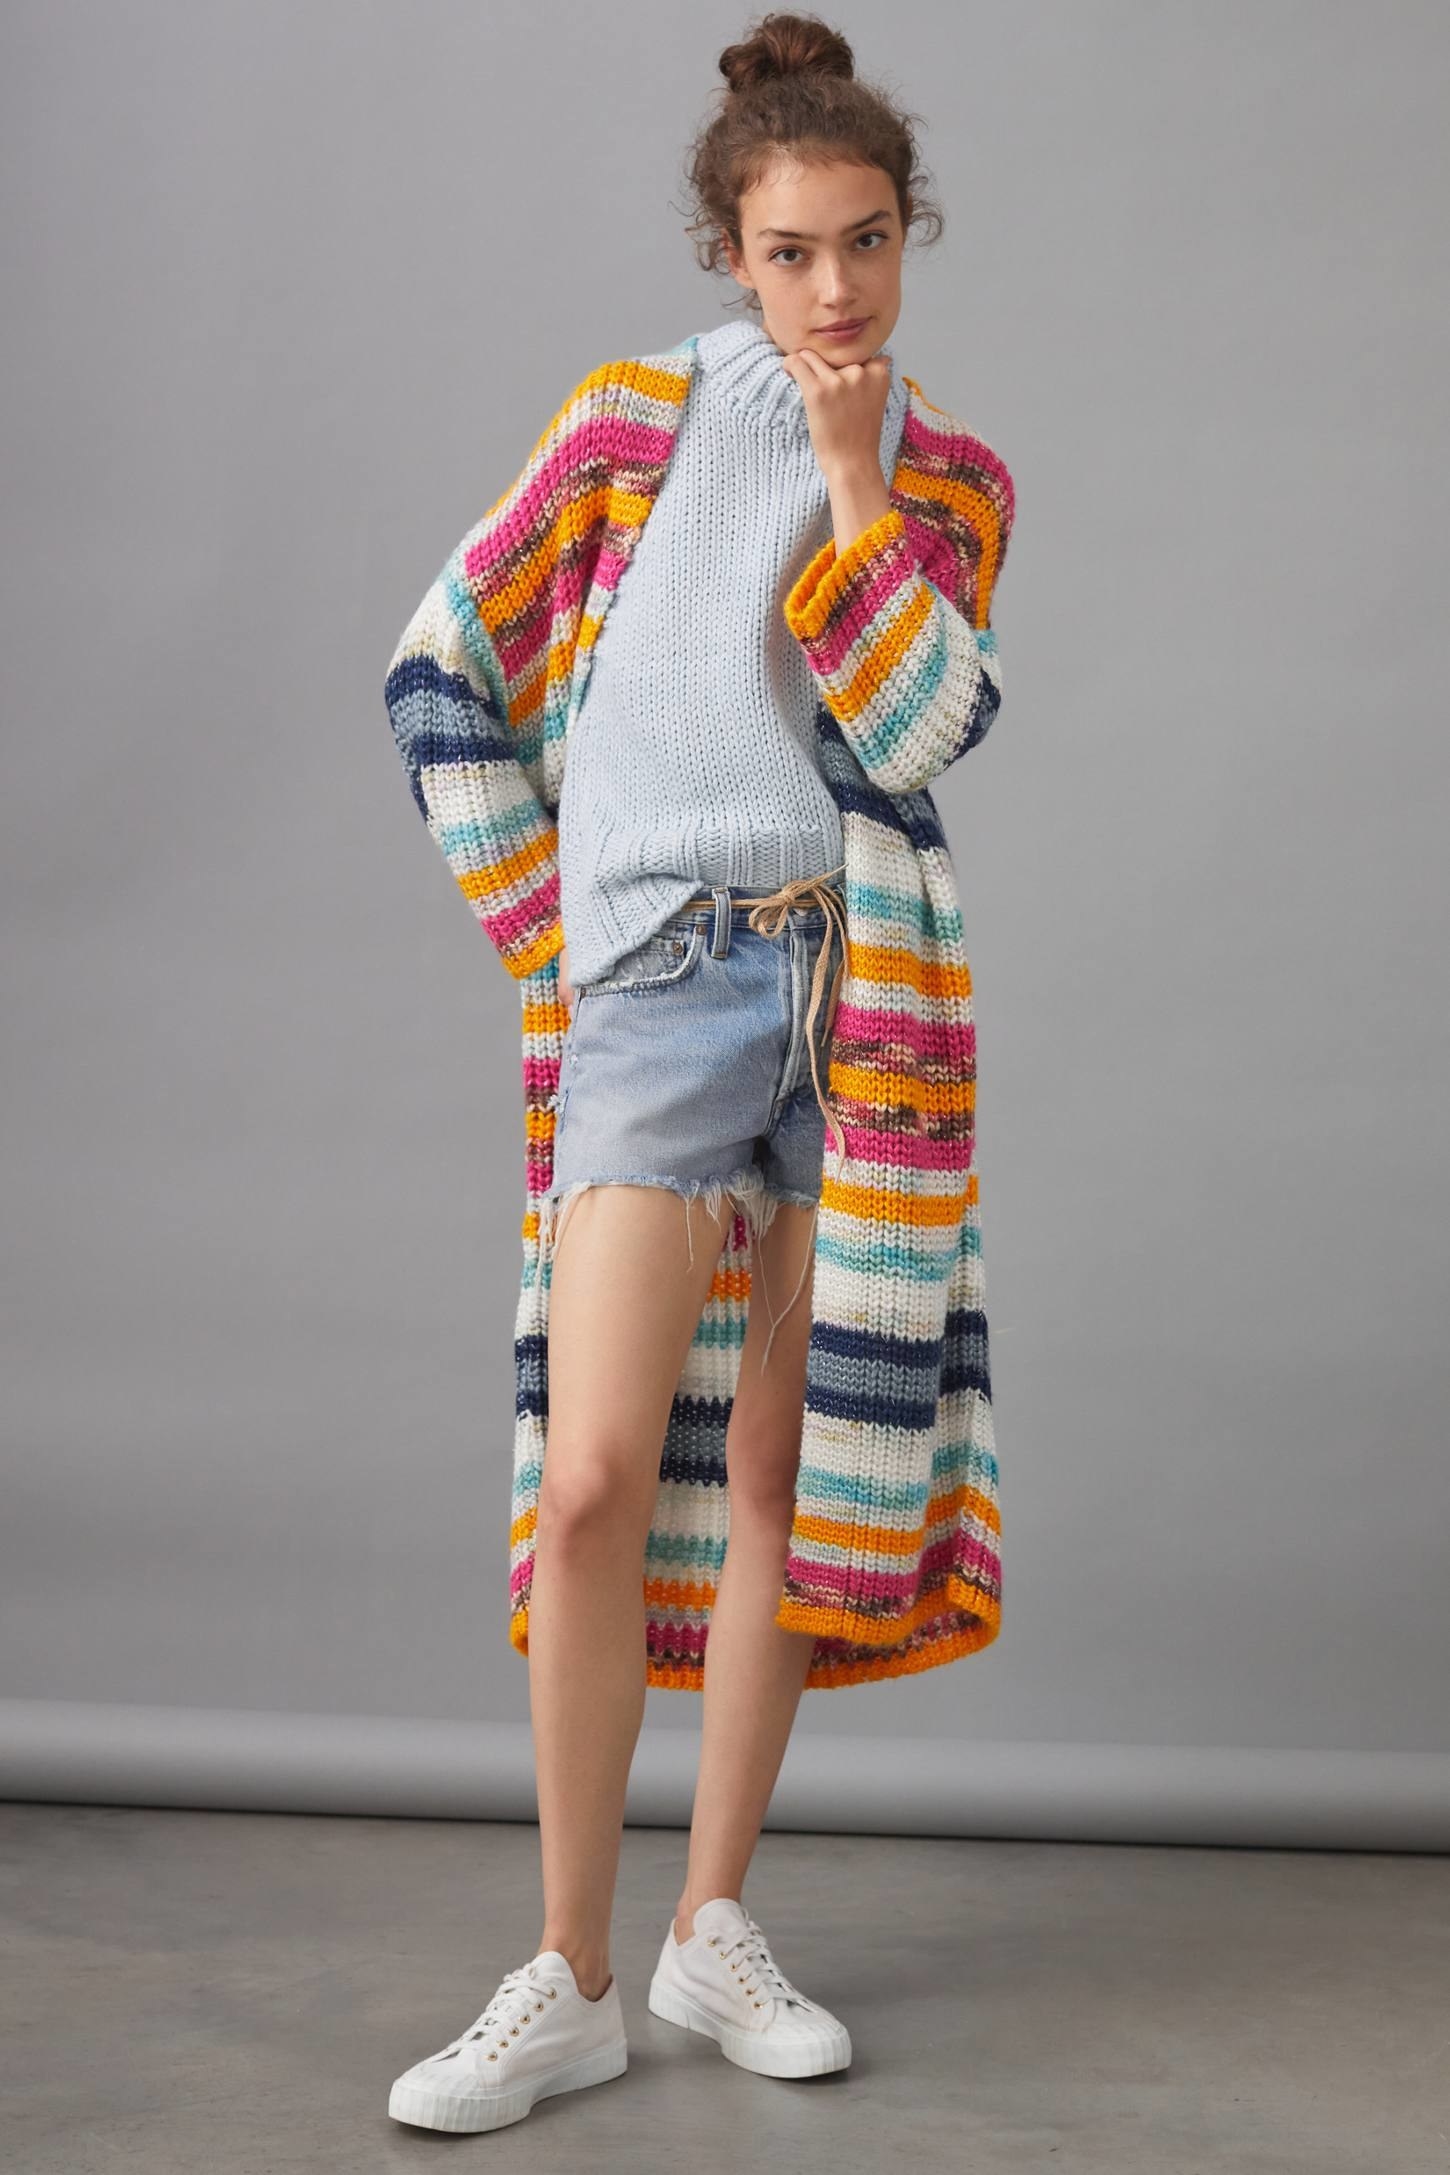 Model wearing the orange striped knit long cardigan